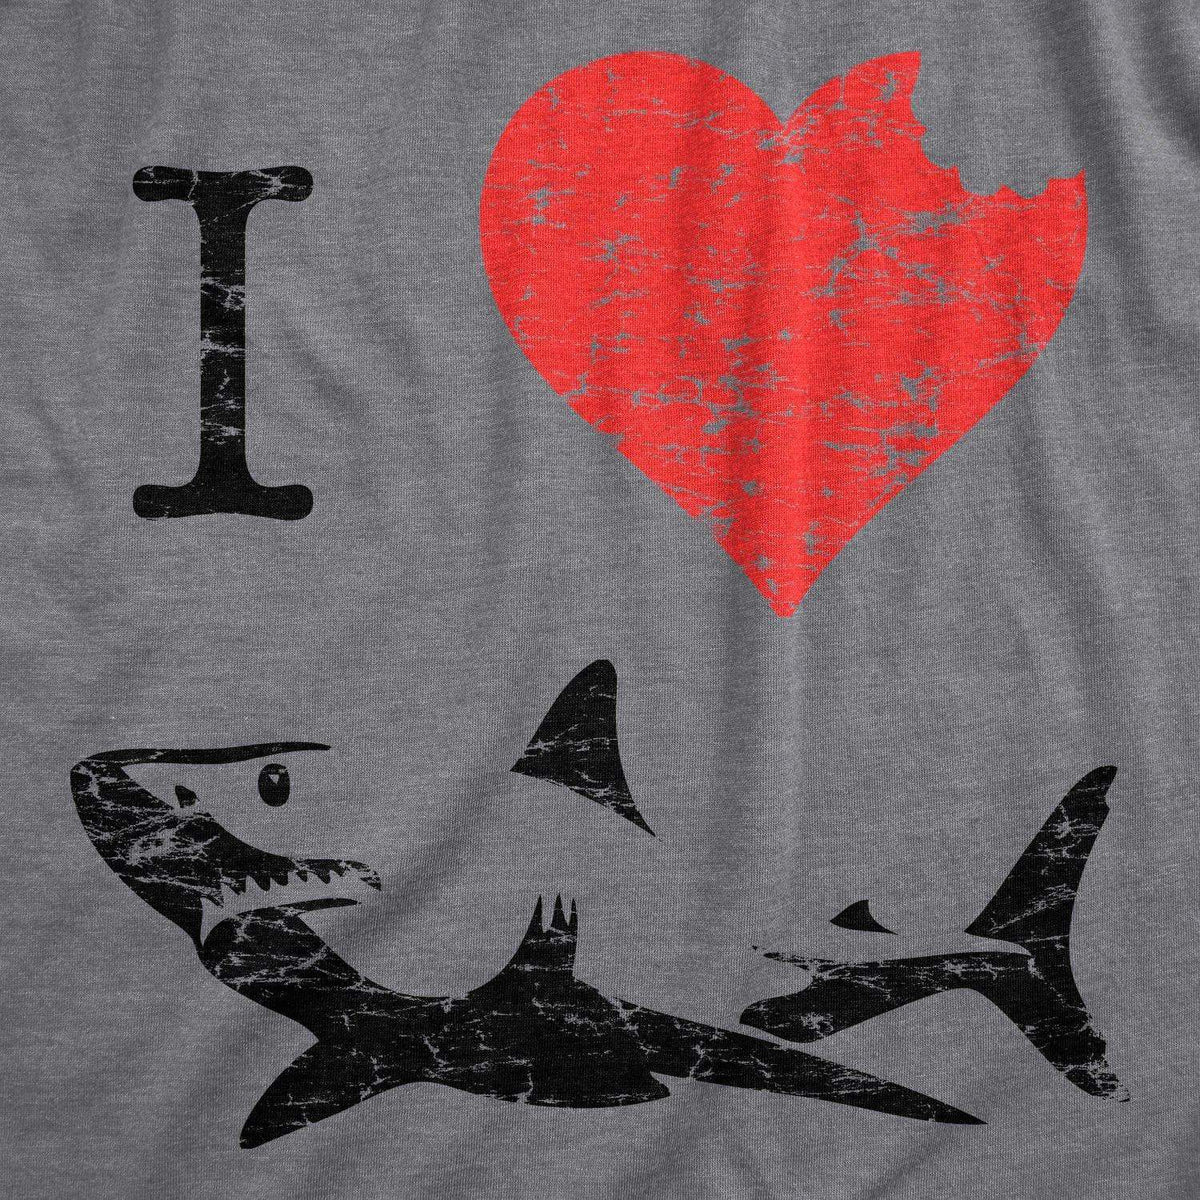 I Love Sharks Youth Tshirt  -  Crazy Dog T-Shirts